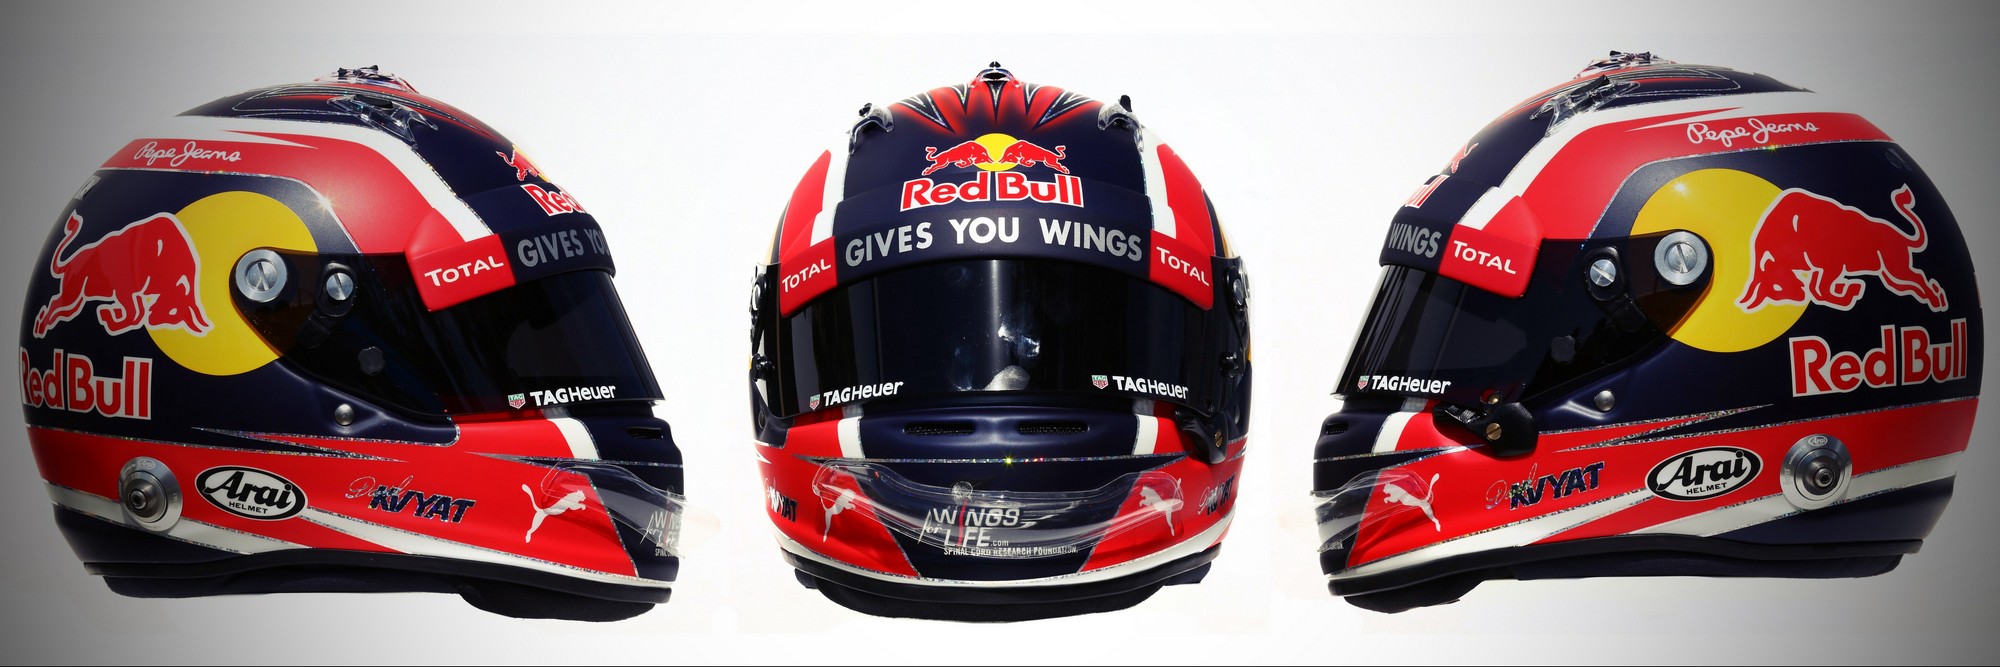 Шлем Даниила Квята на сезон 2016 года | 2016 helmet of Daniil Kvyat